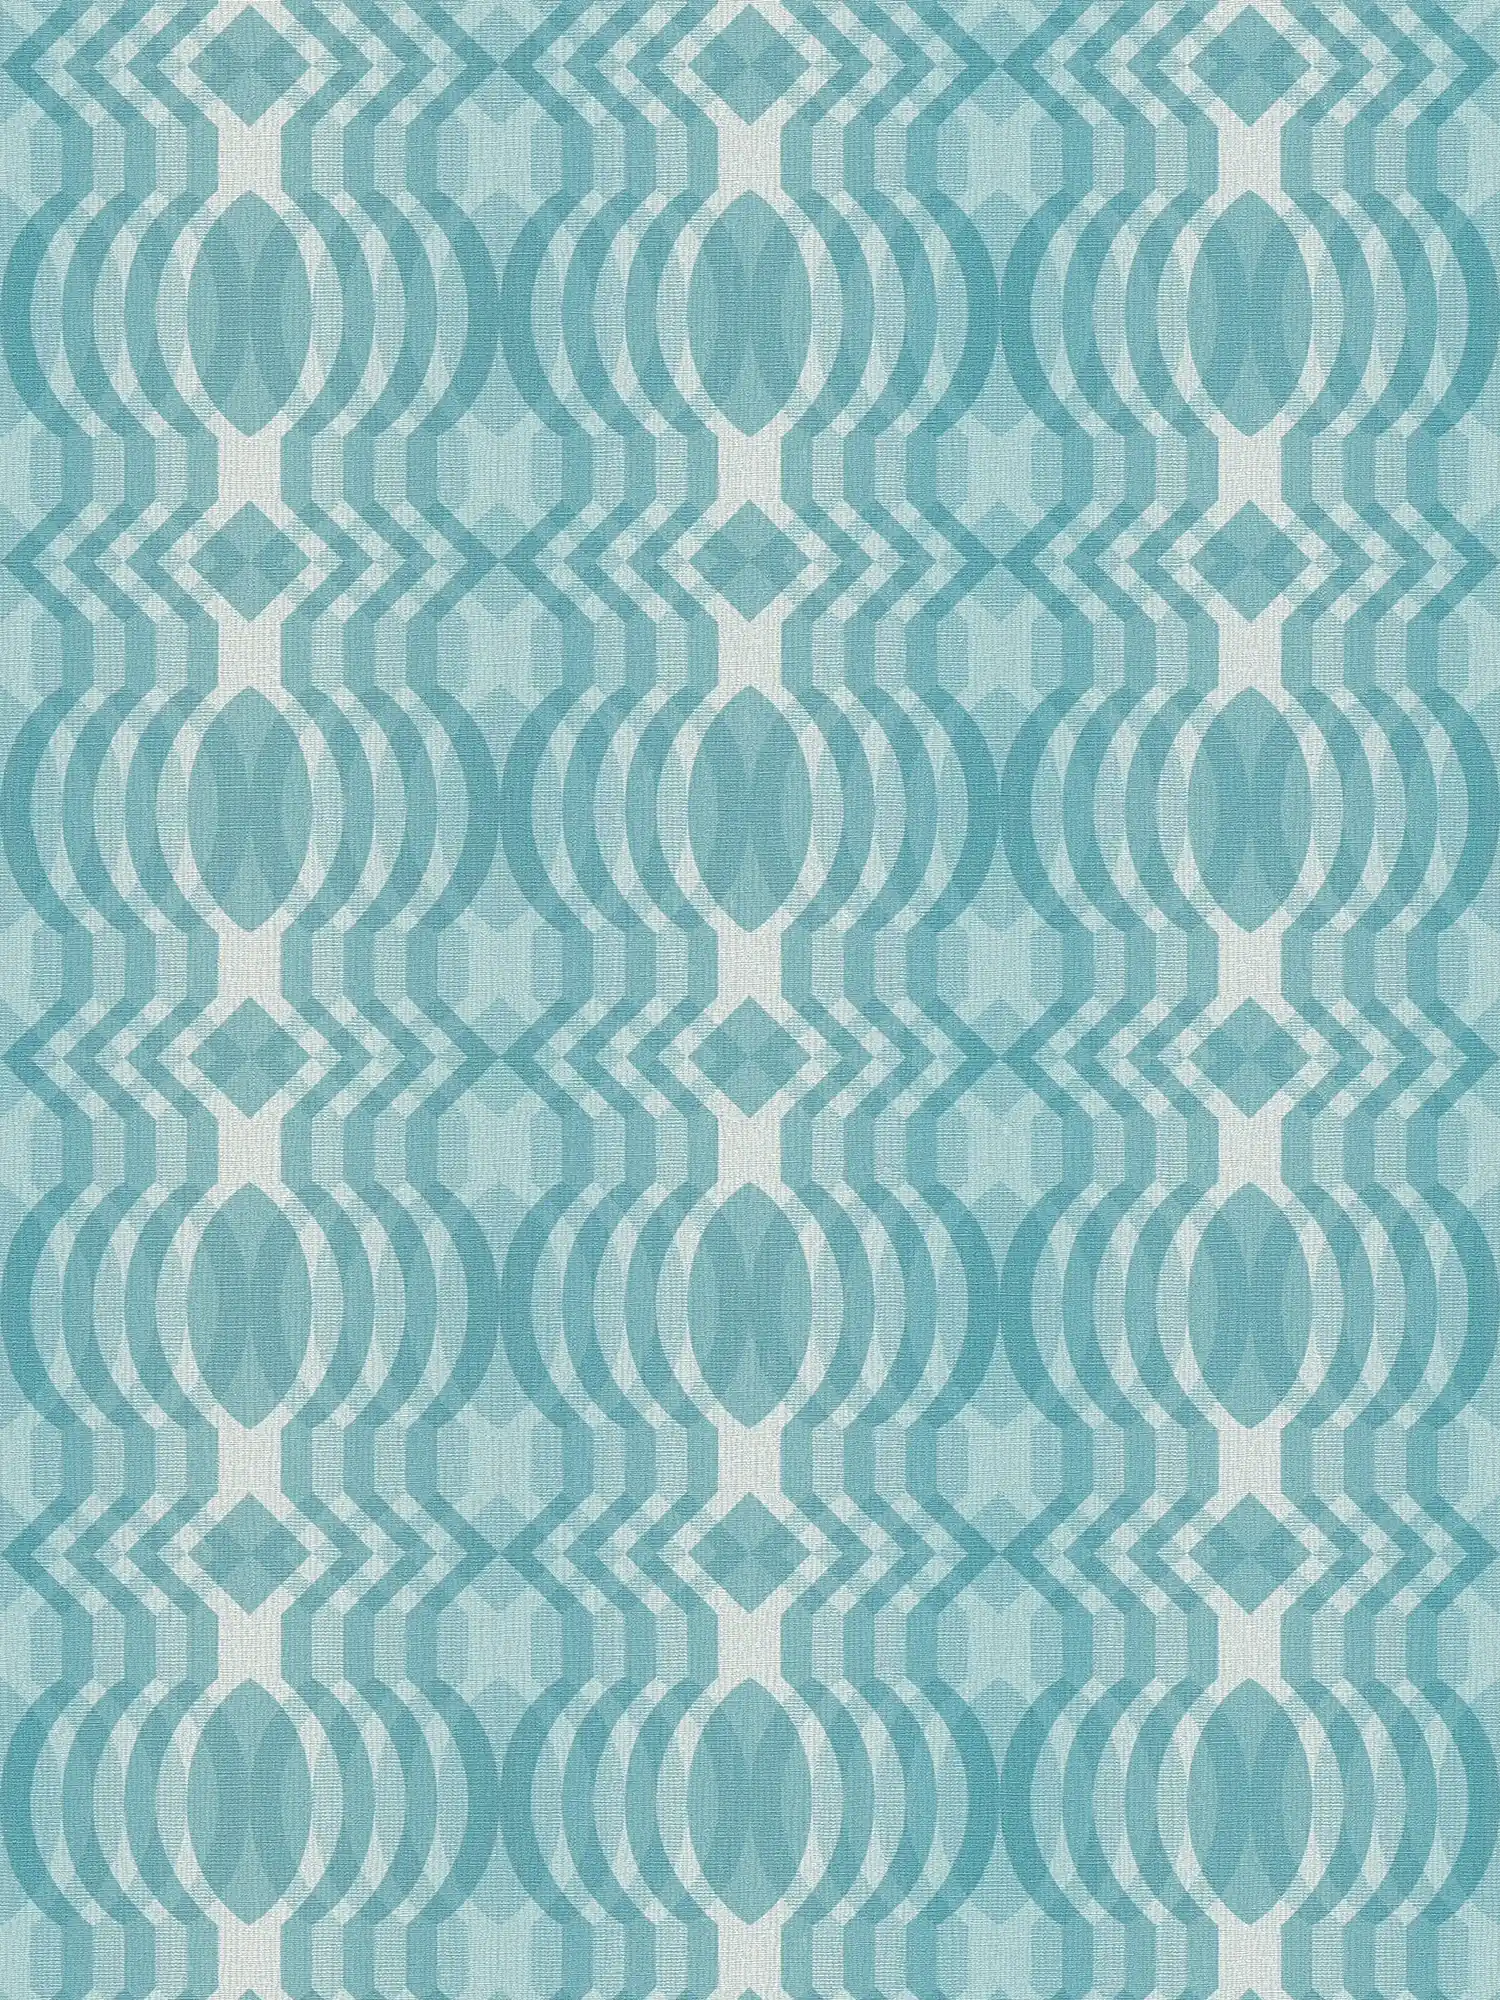 Retro wallpaper with geometric pattern - blue, cream, white
